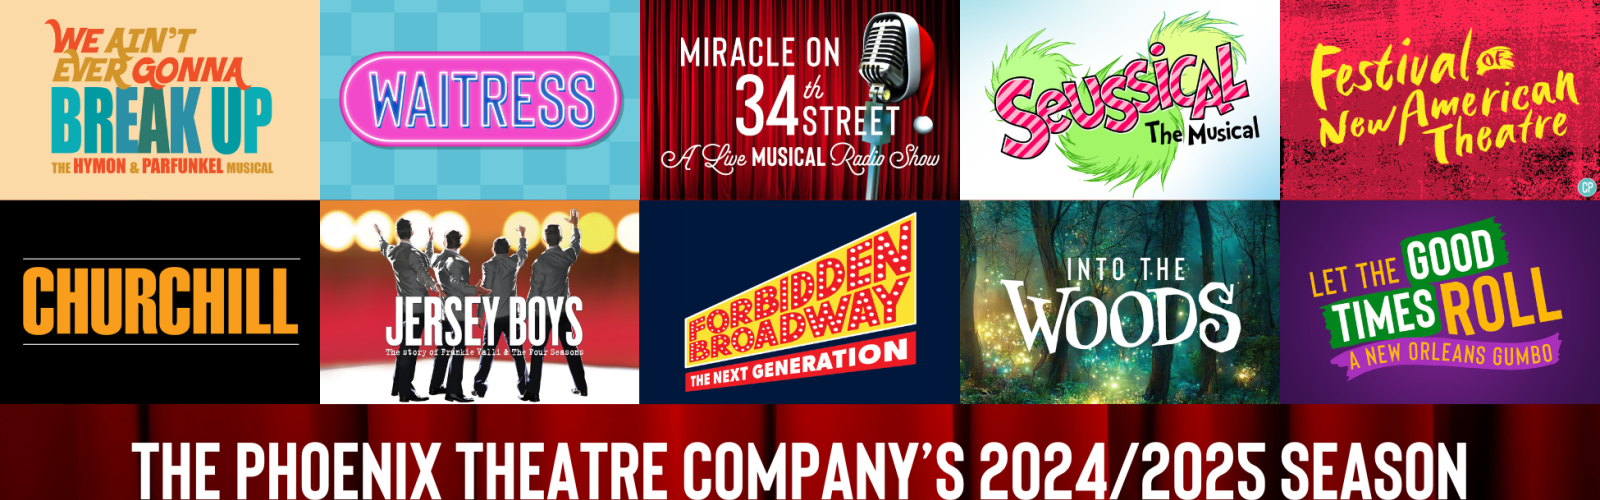 The Phoenix Theatre Company 2024/2025 Season